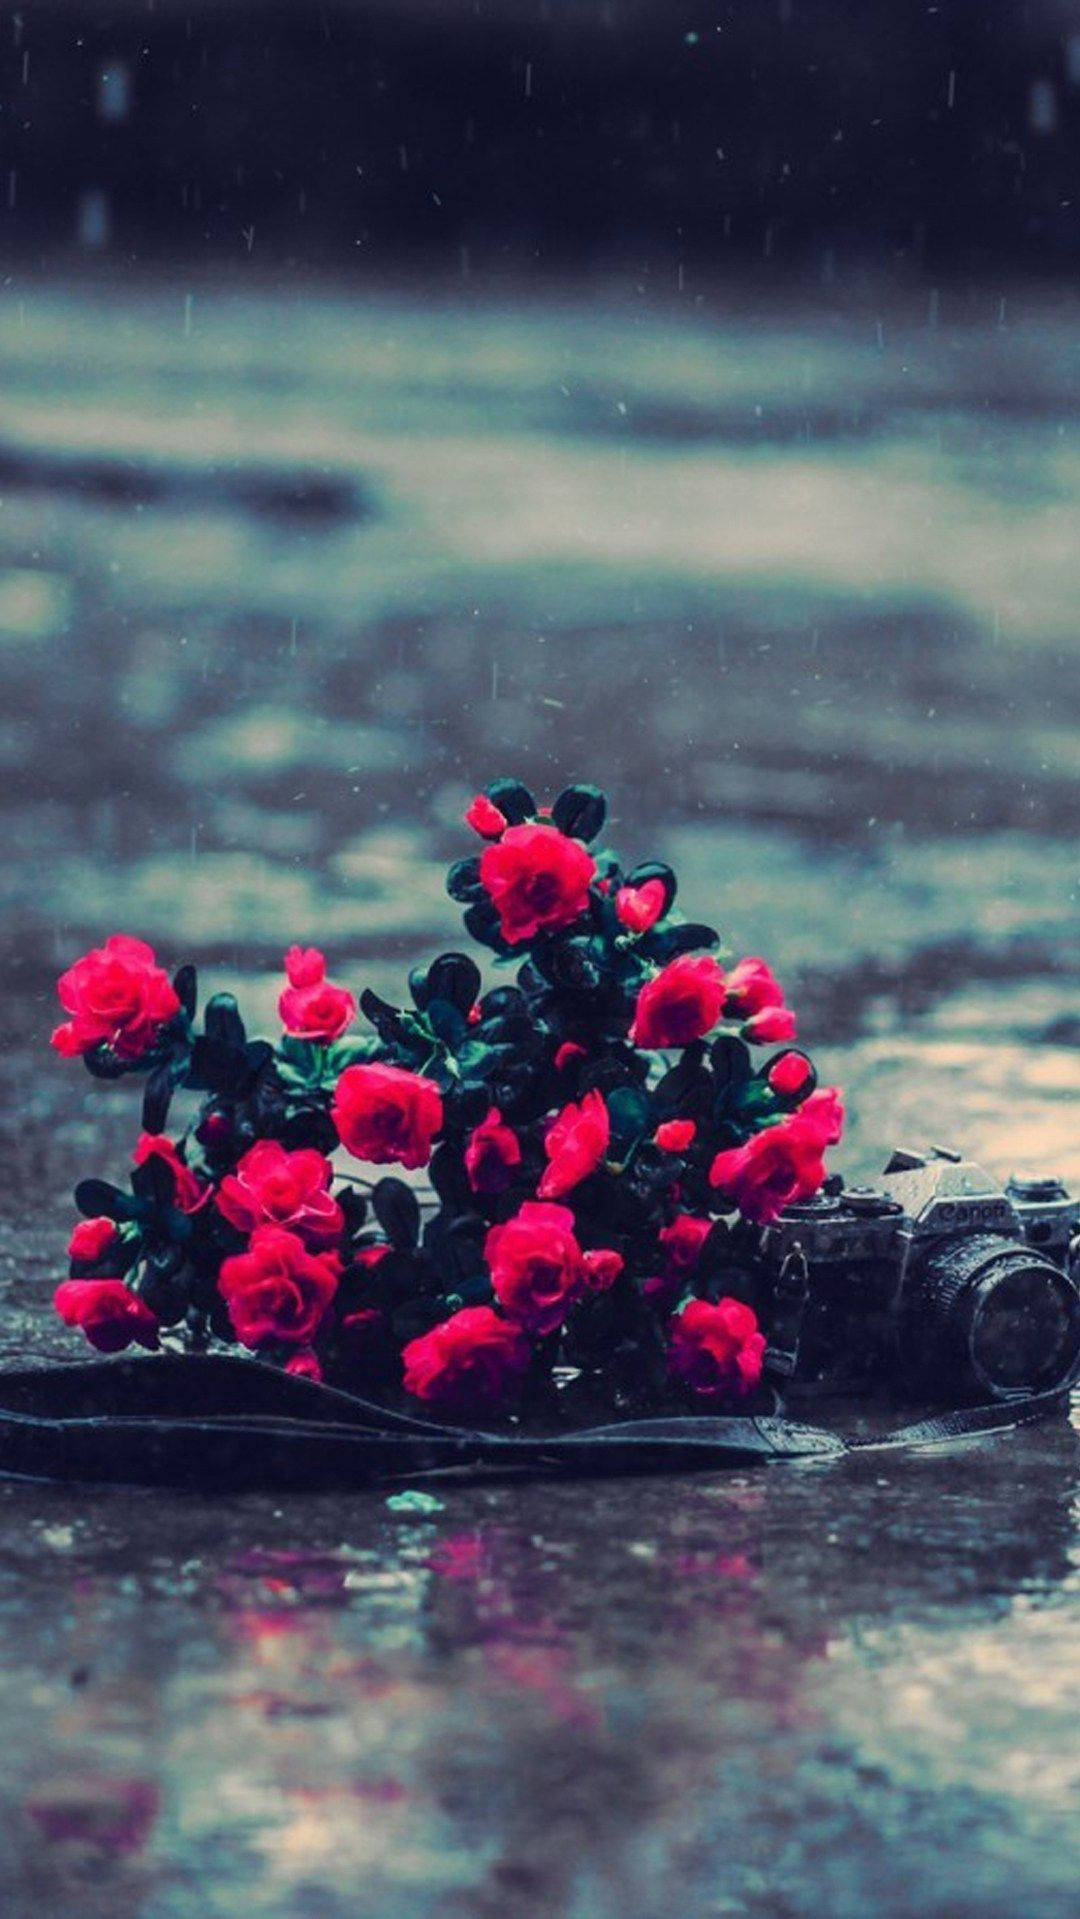 Camera And Roses Under The Beautiful Rain Wallpaper